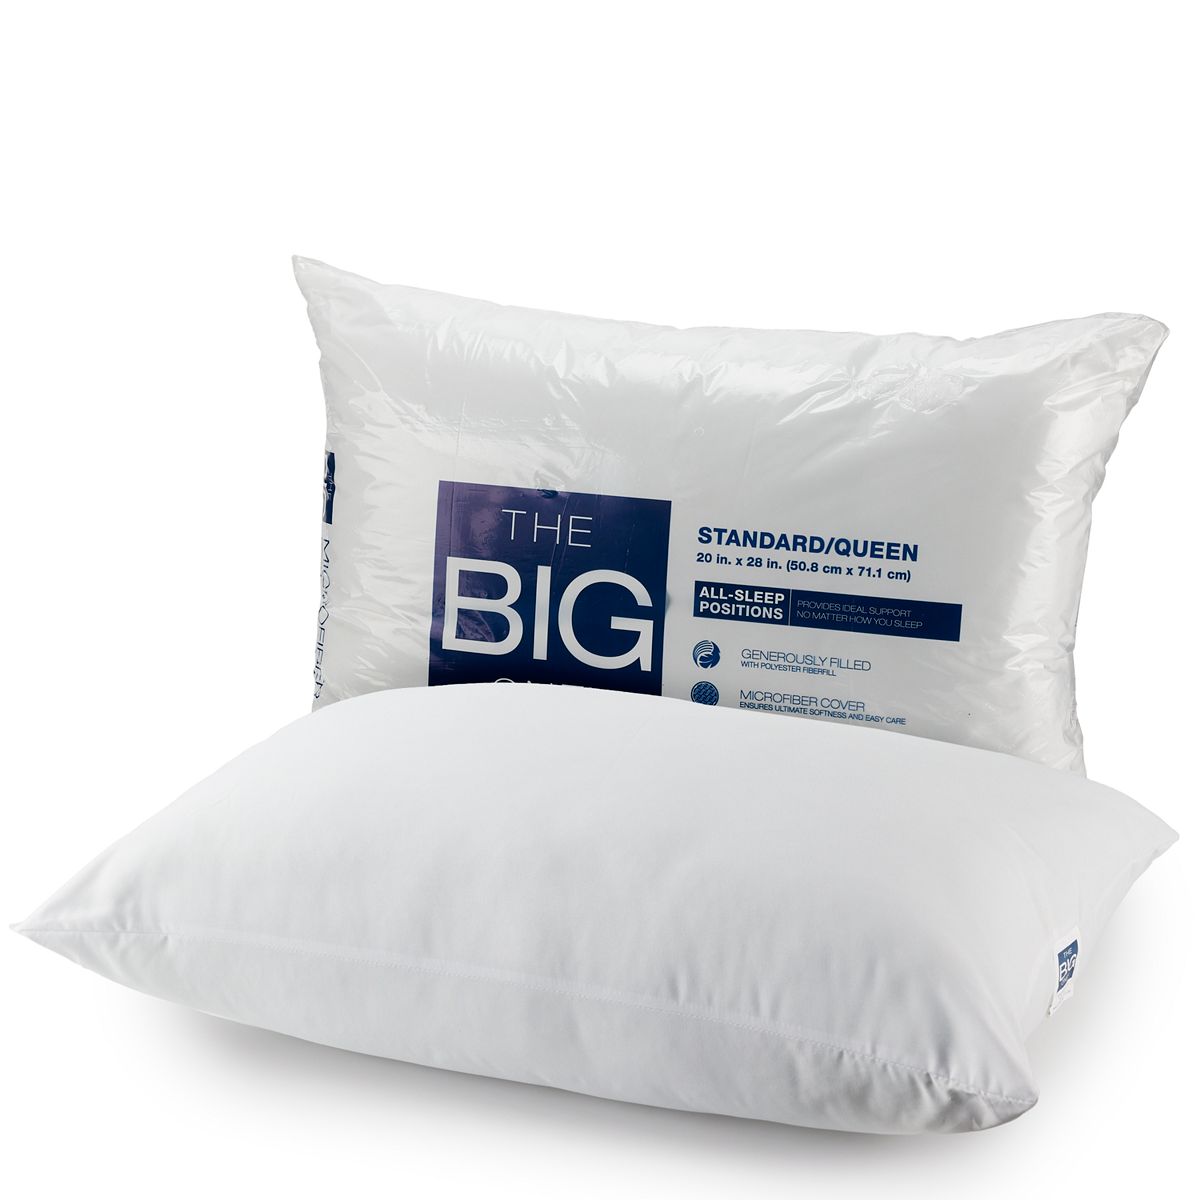 The Big One® Microfiber Pillow $3.39